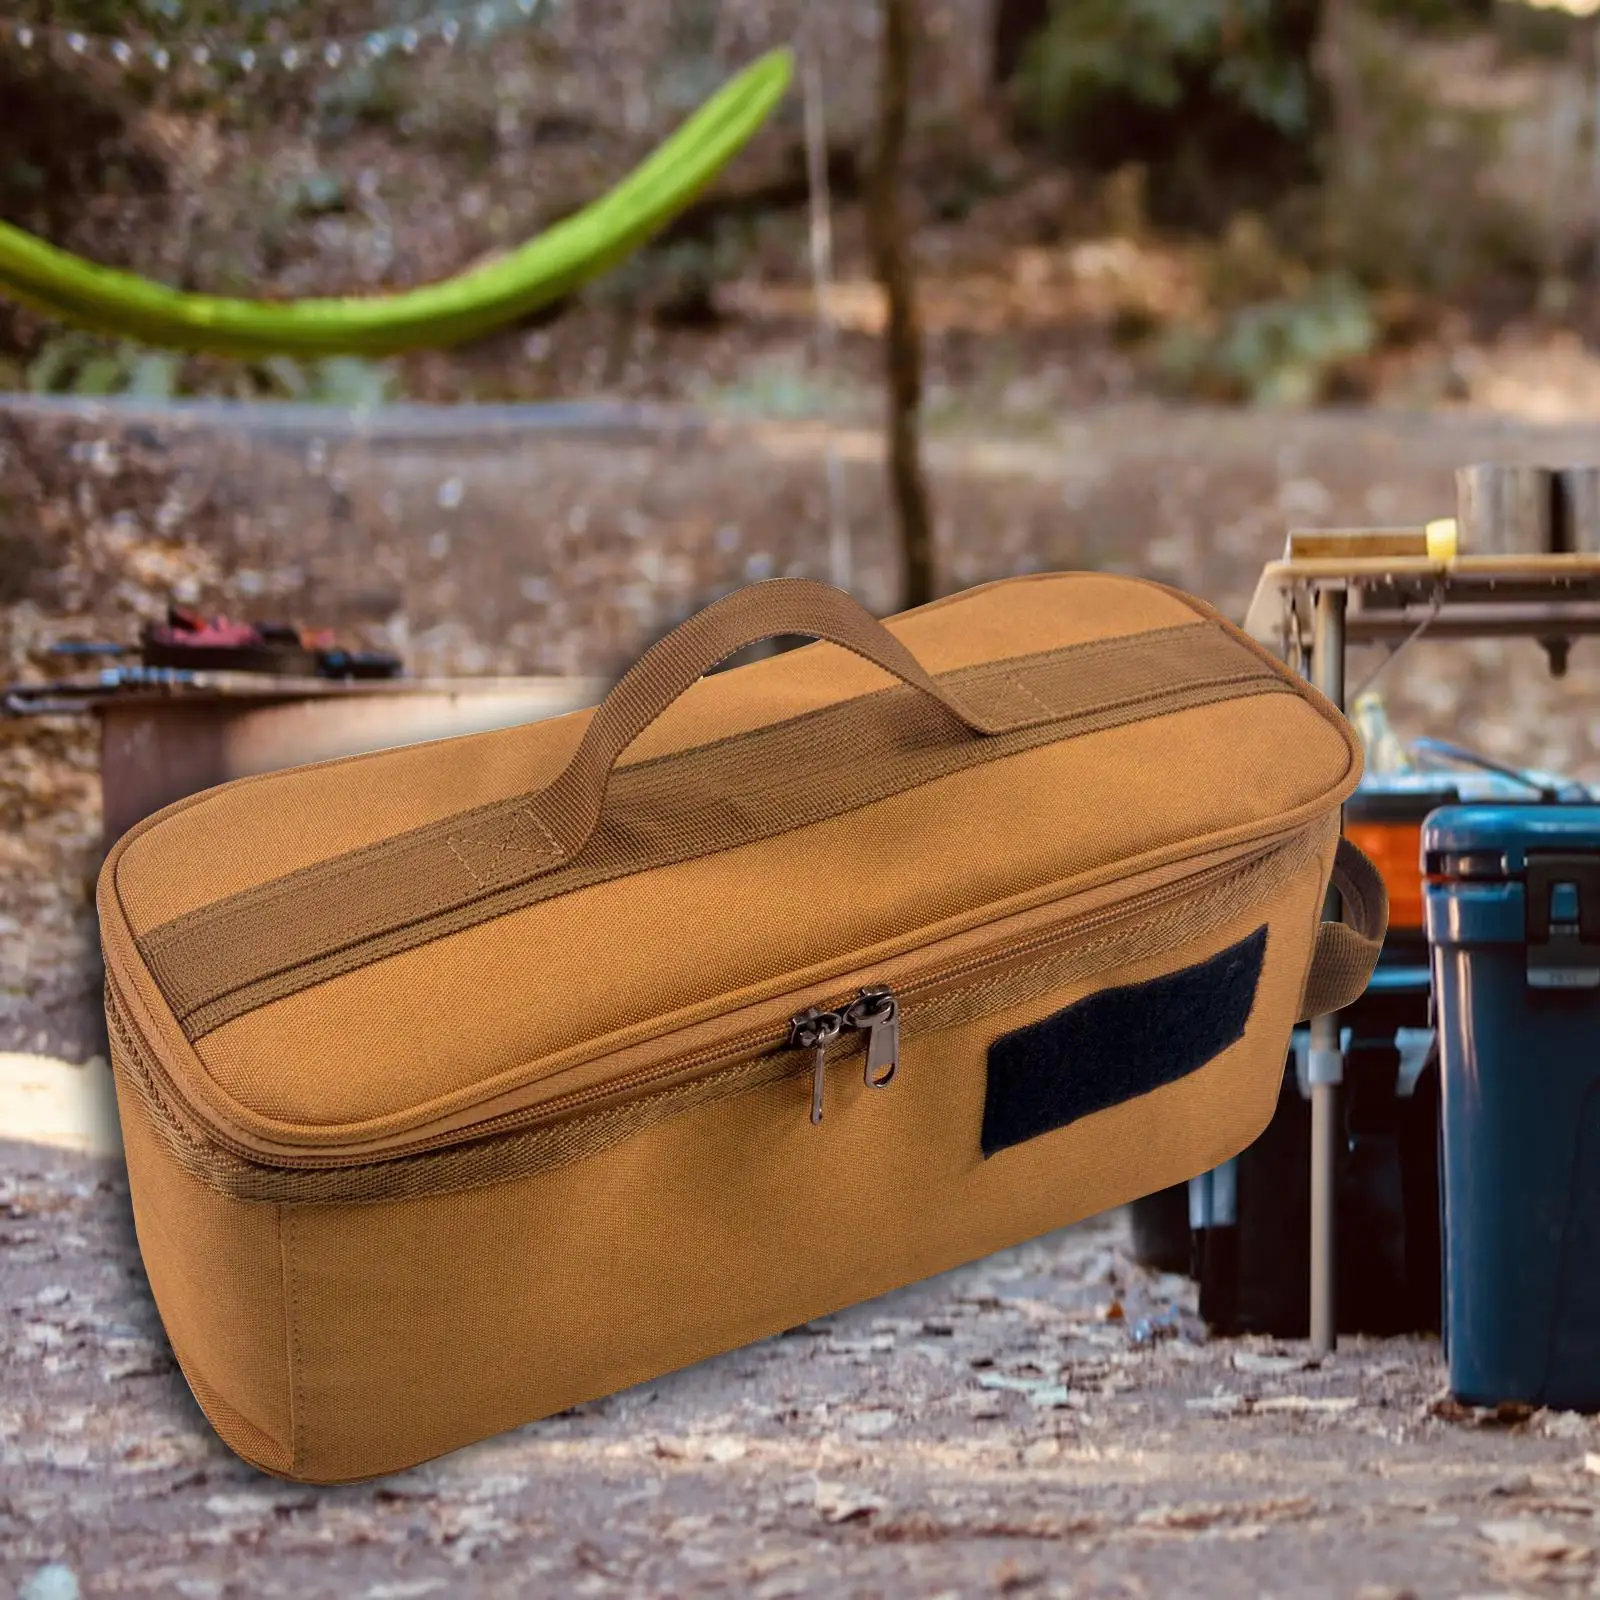 Lightweight Camping Tableware Storage Bag Travel Bag for Cookware Kitchen Travel